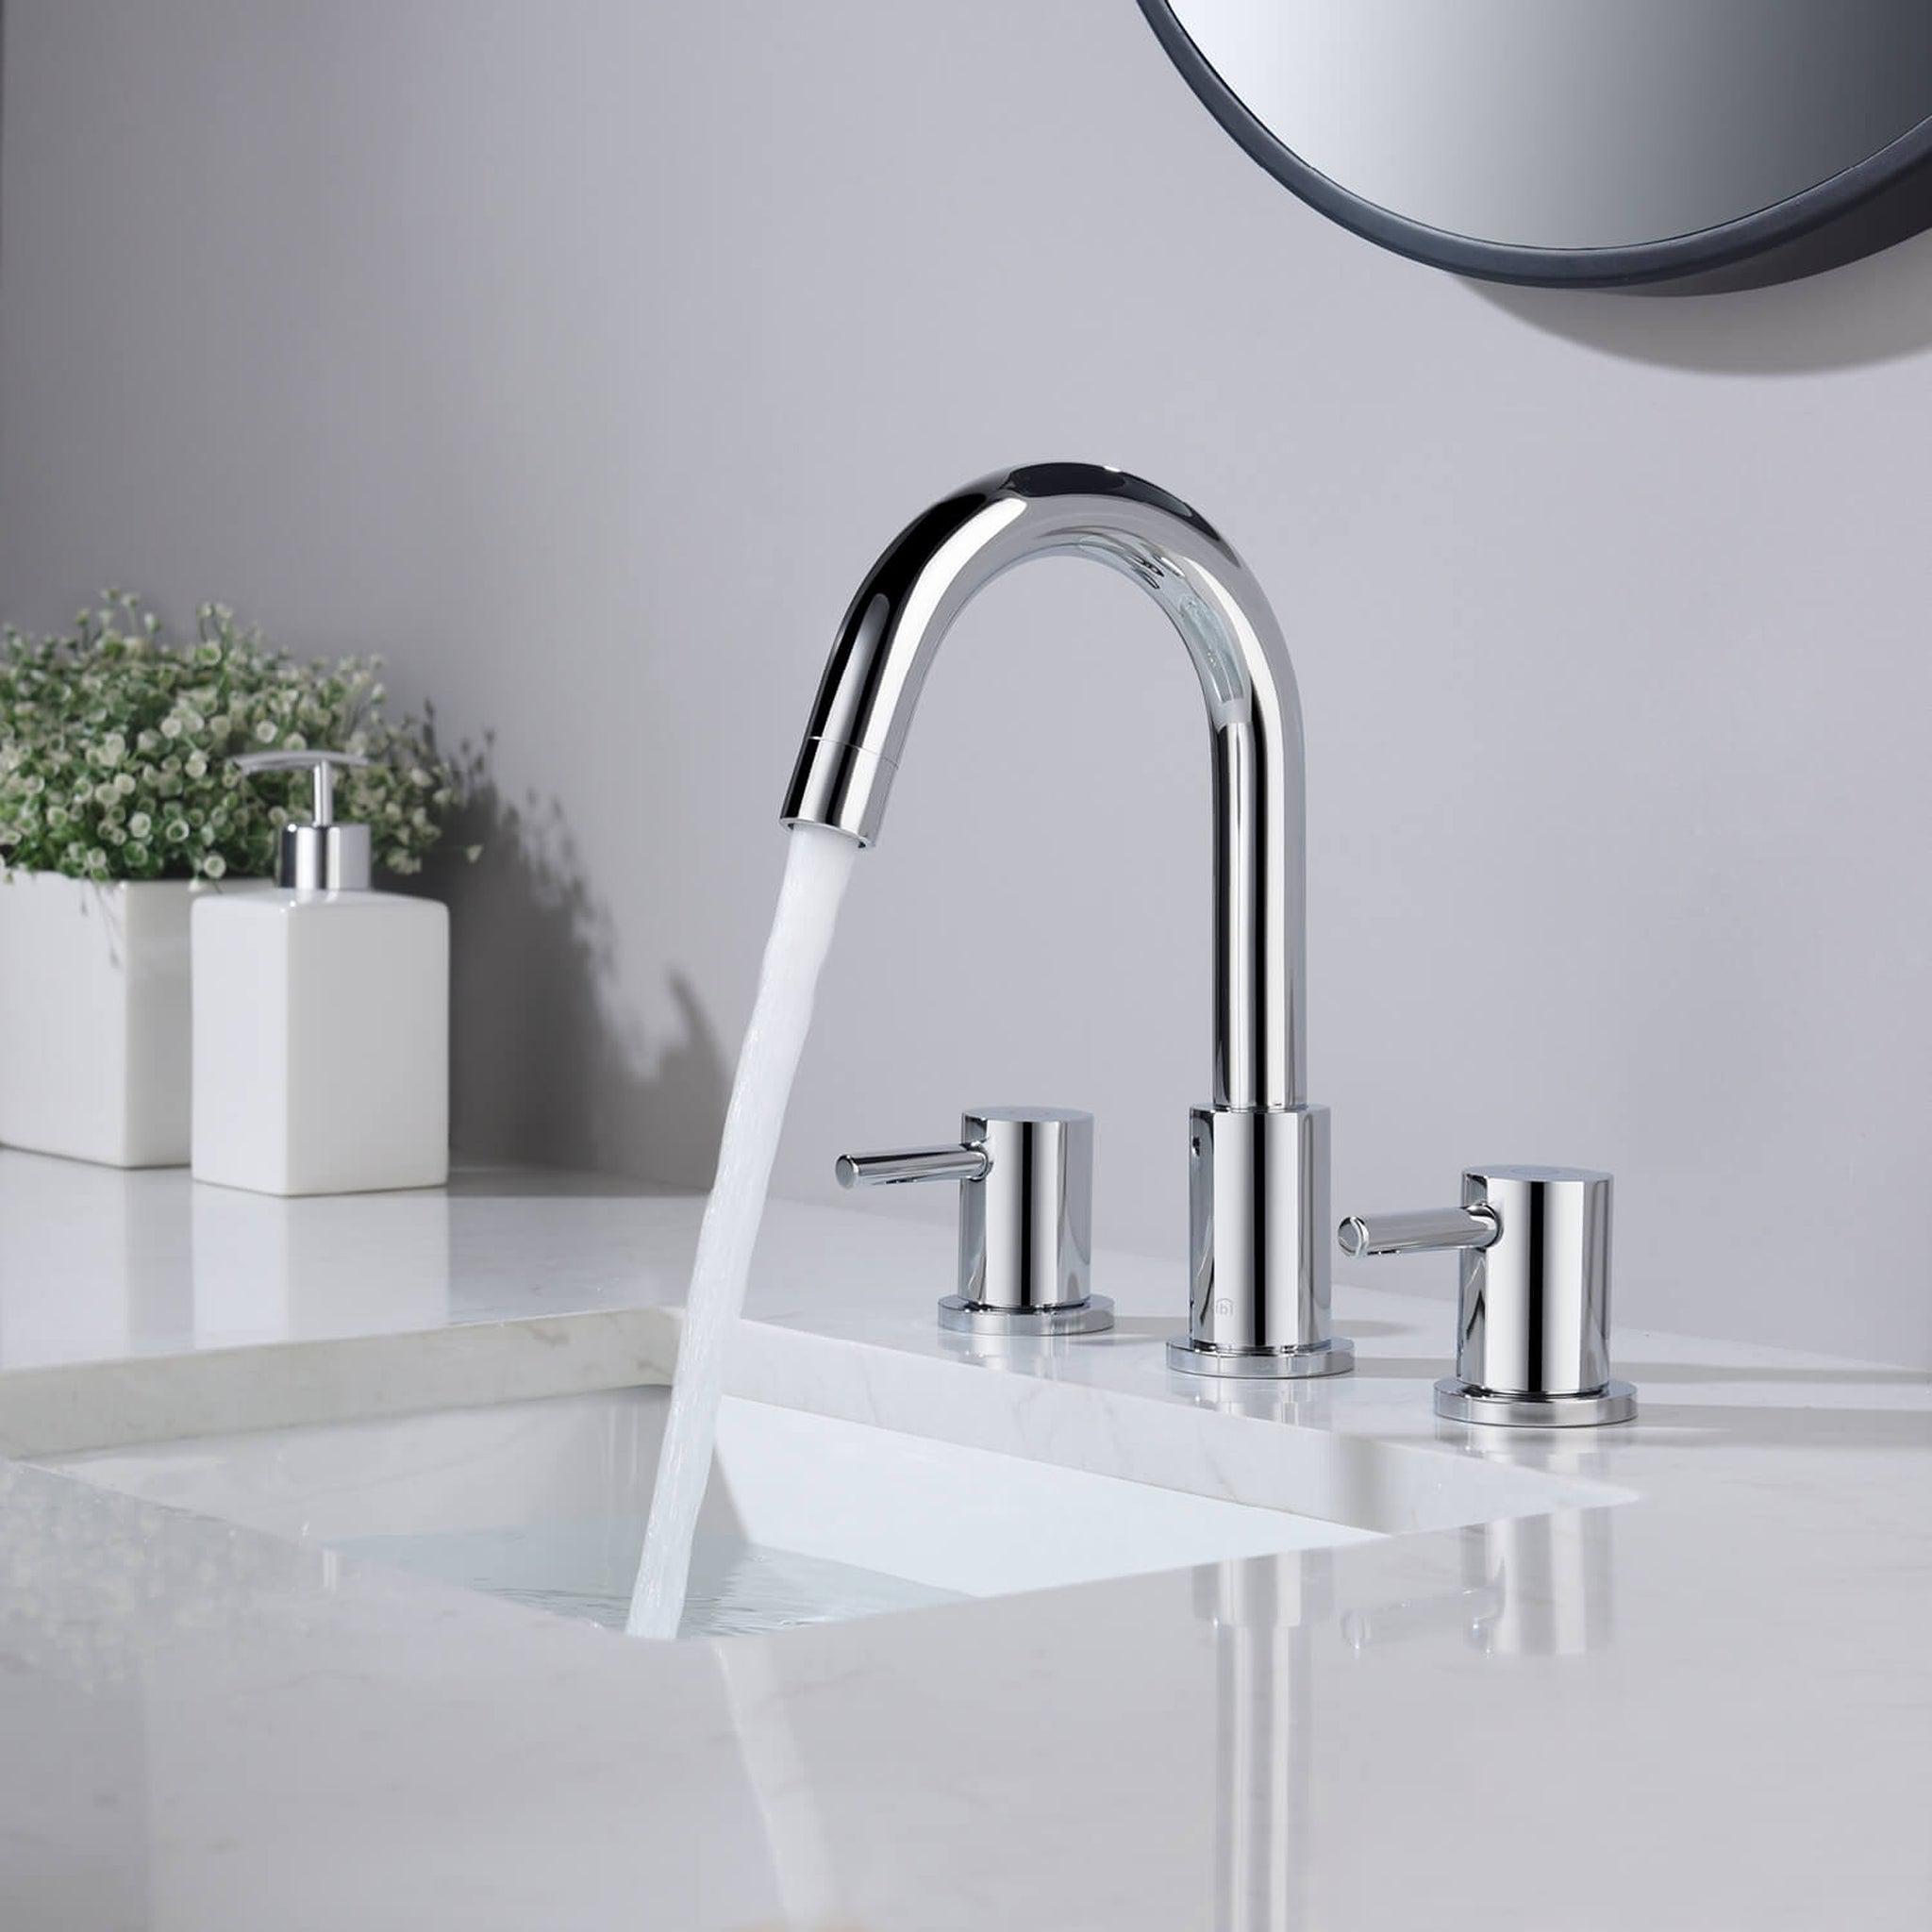 KIBI, KIBI Circular 8" Widespread 2-Handle Chrome Solid Brass Bathroom Sink Faucet With Pop-Up Drain